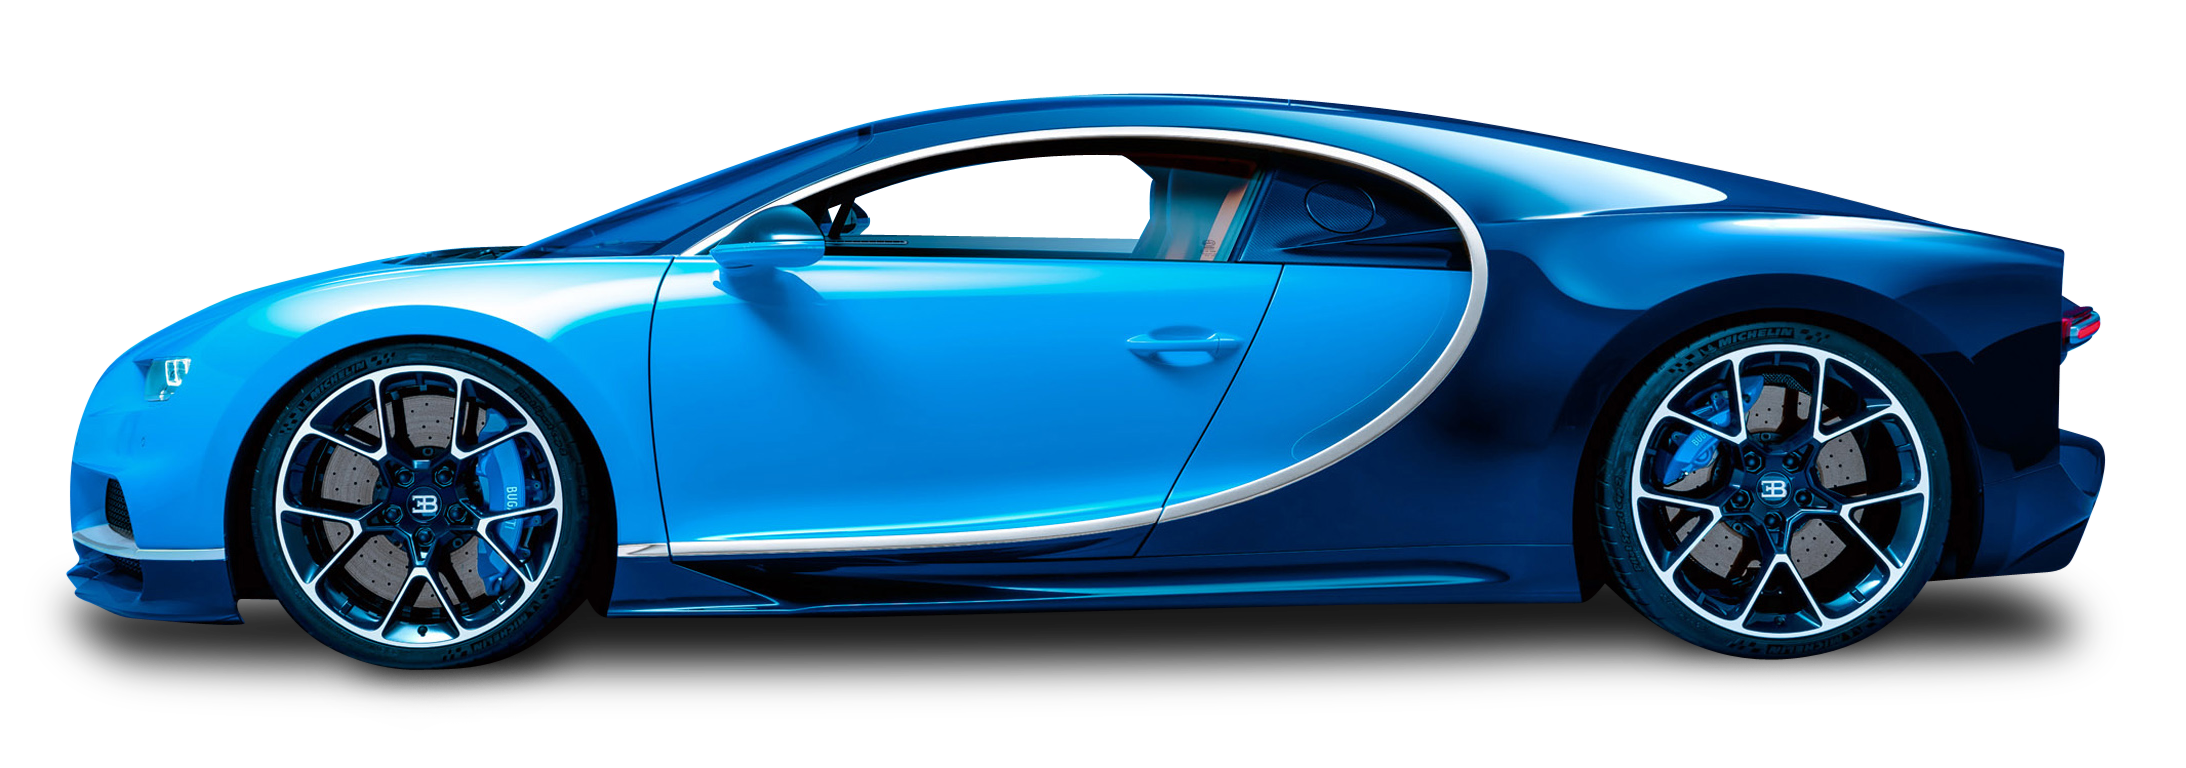 Bugatti Chiron Transparent Image